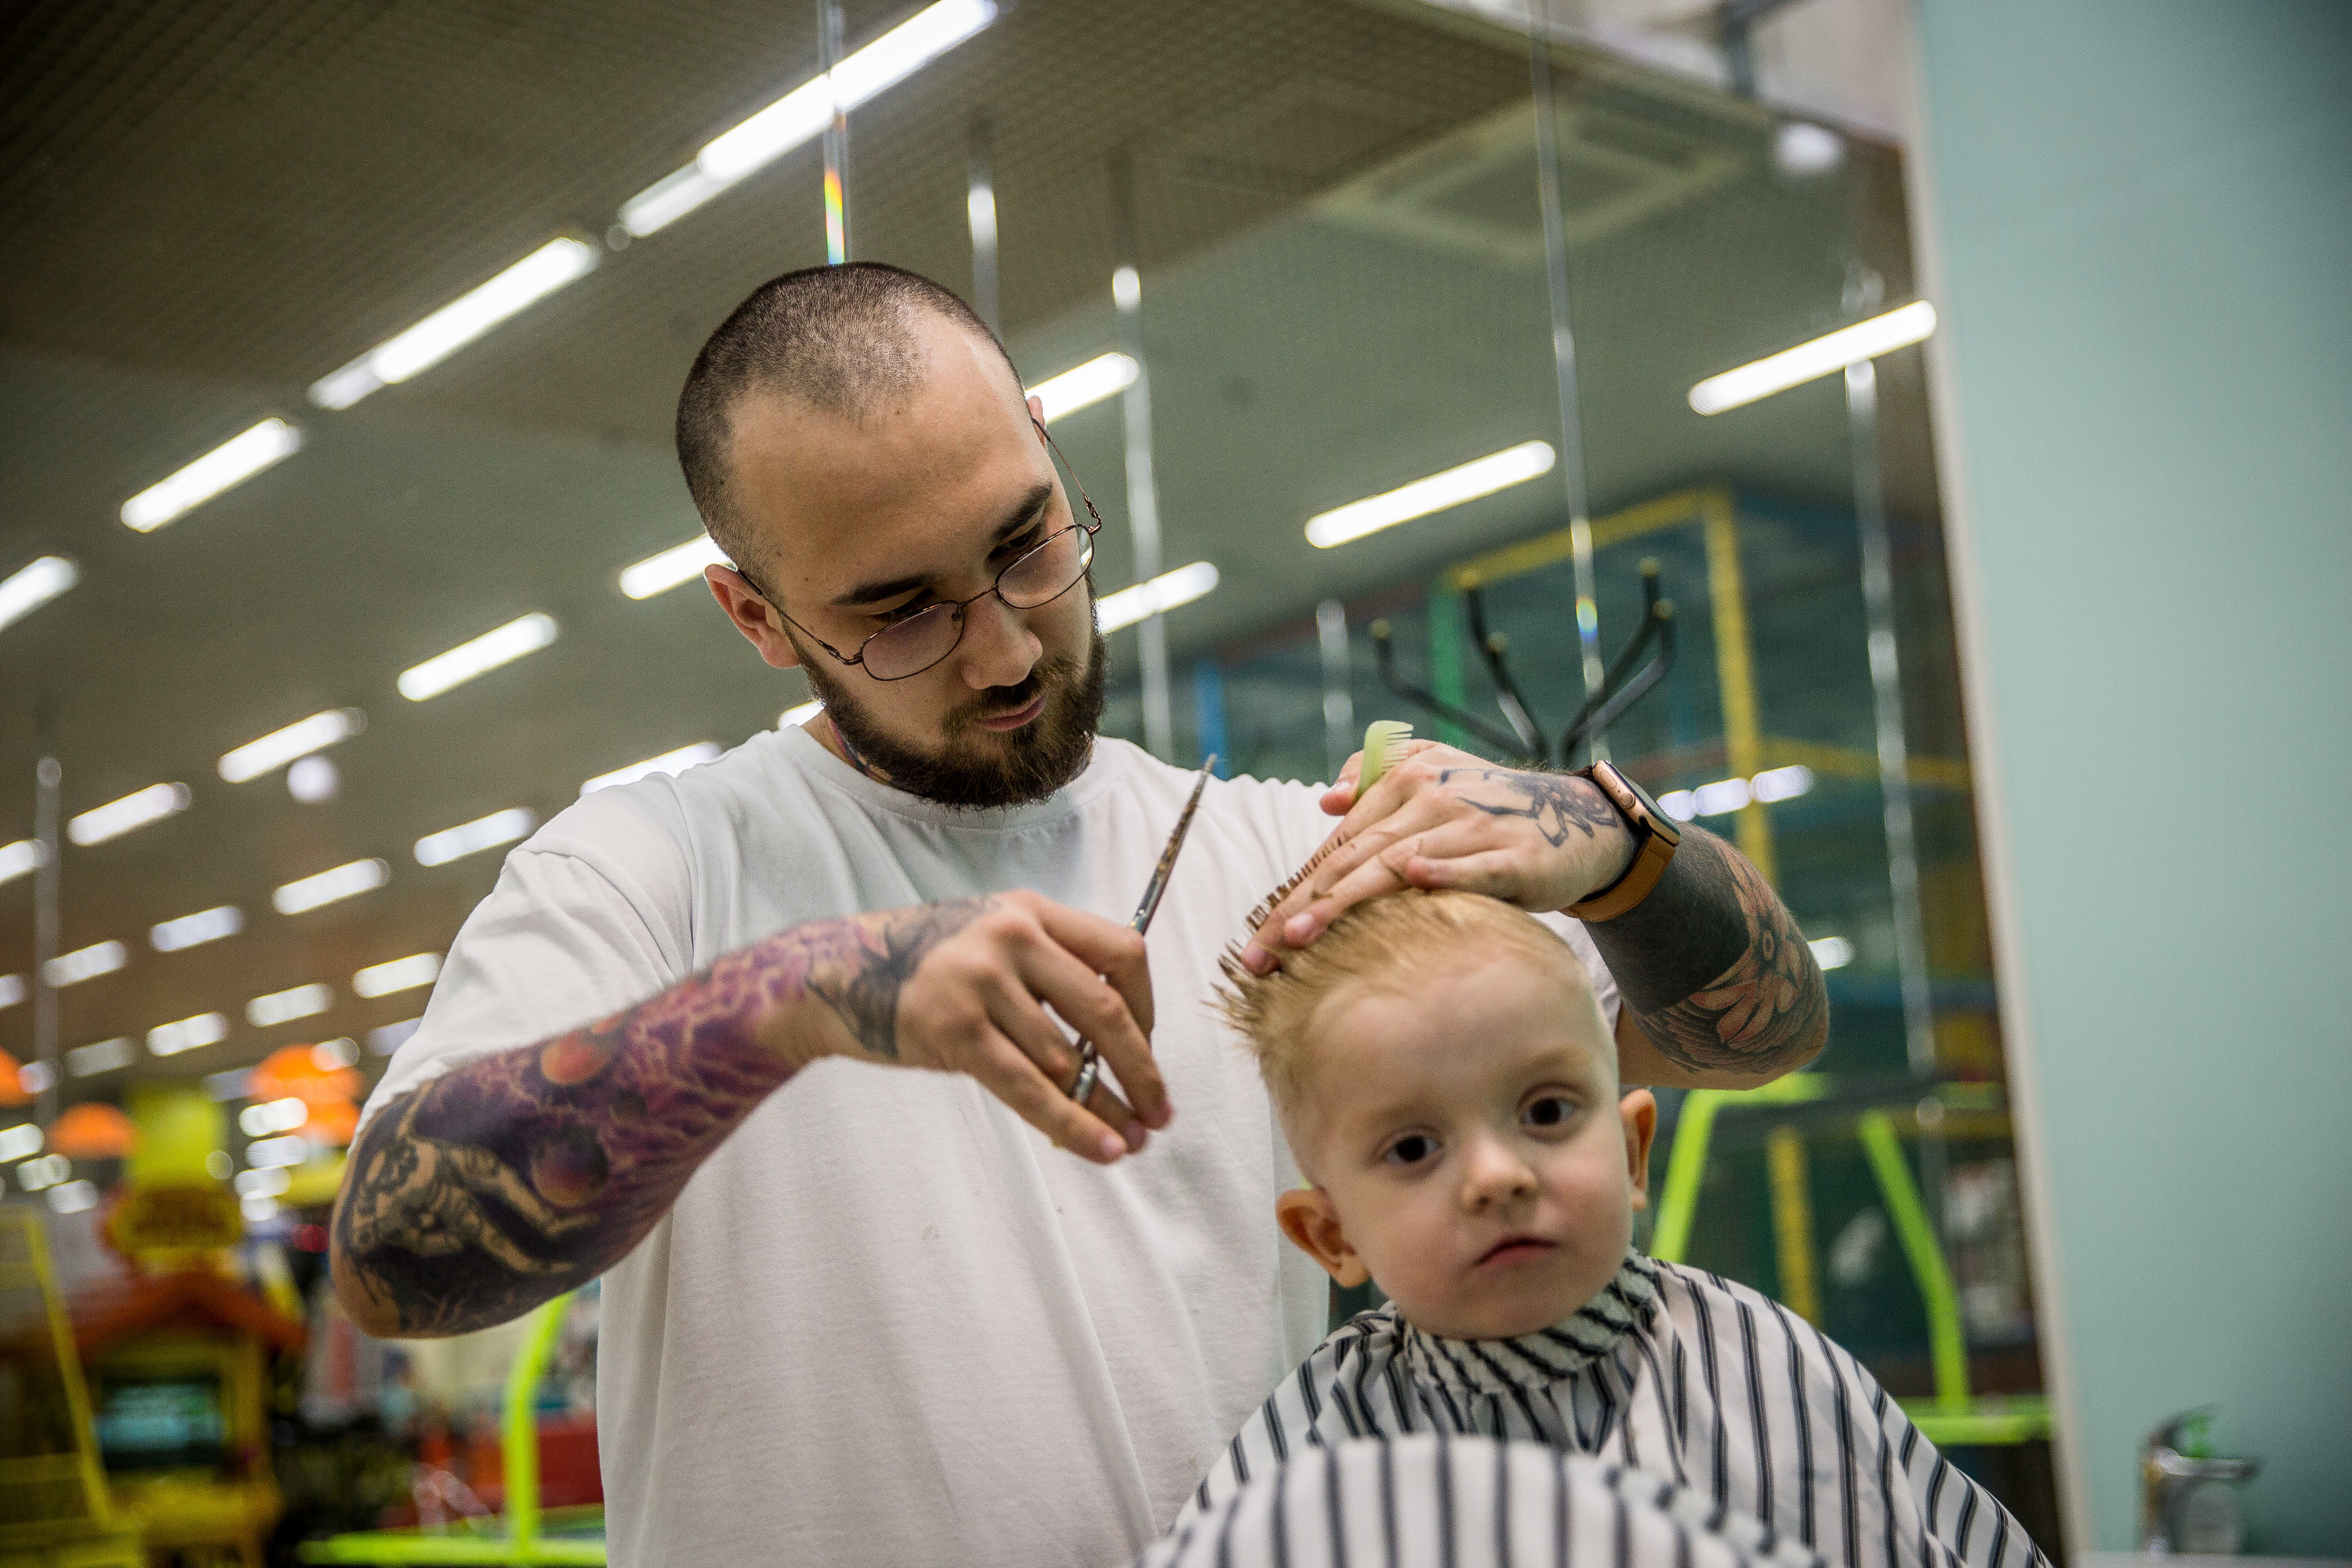 Подстригли ребенка без ведома родителей